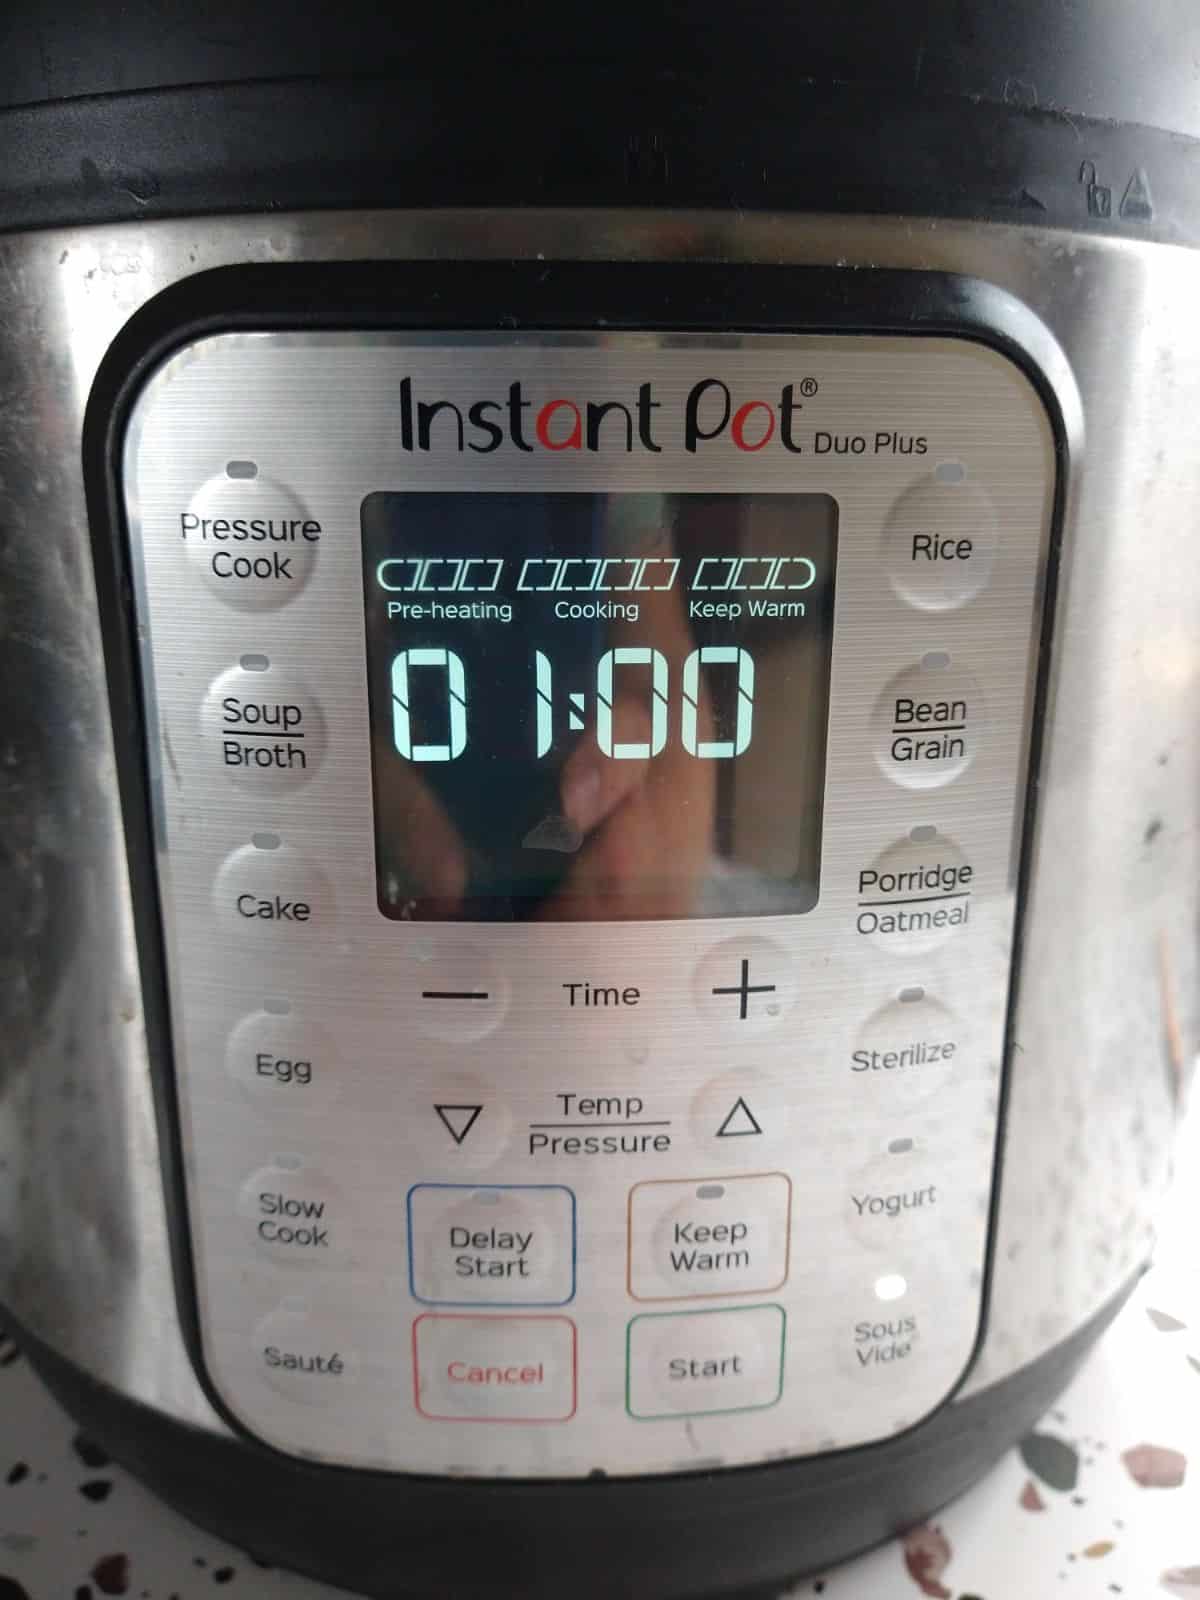 Instant Pot Duo Plus set to 1 hour.